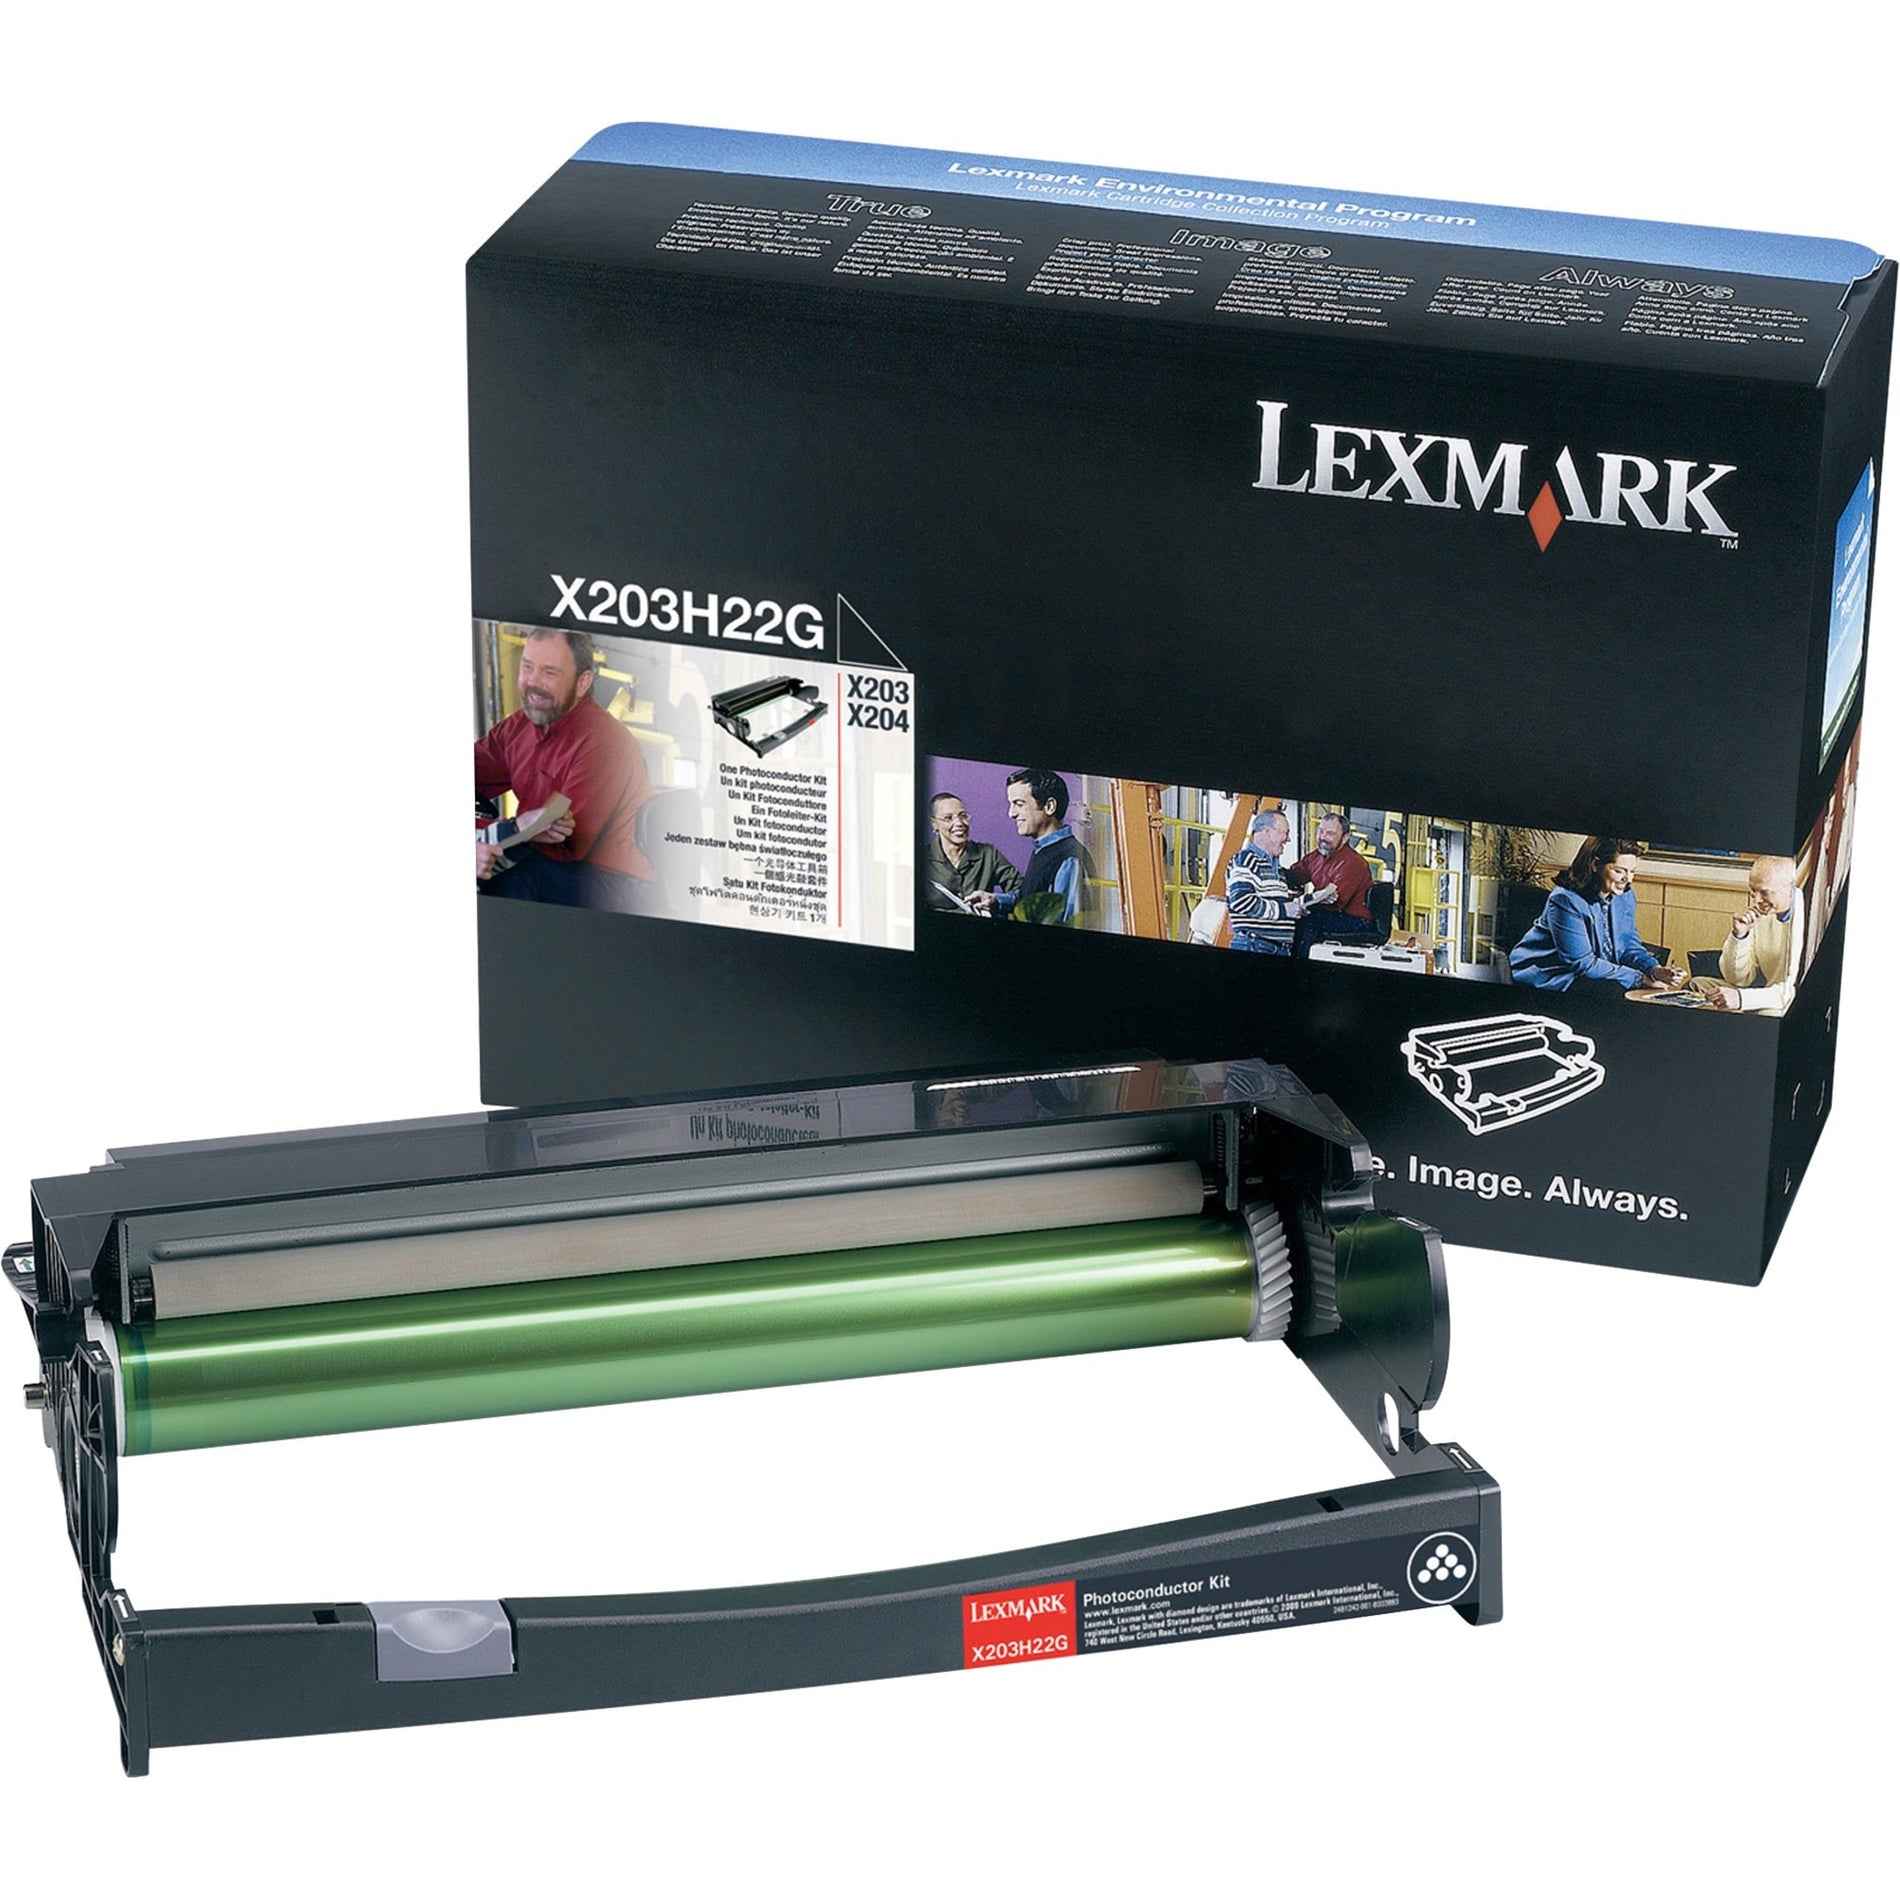 Lexmark X203H22G Photoconductor Kit, 25000 Page Yield, Black